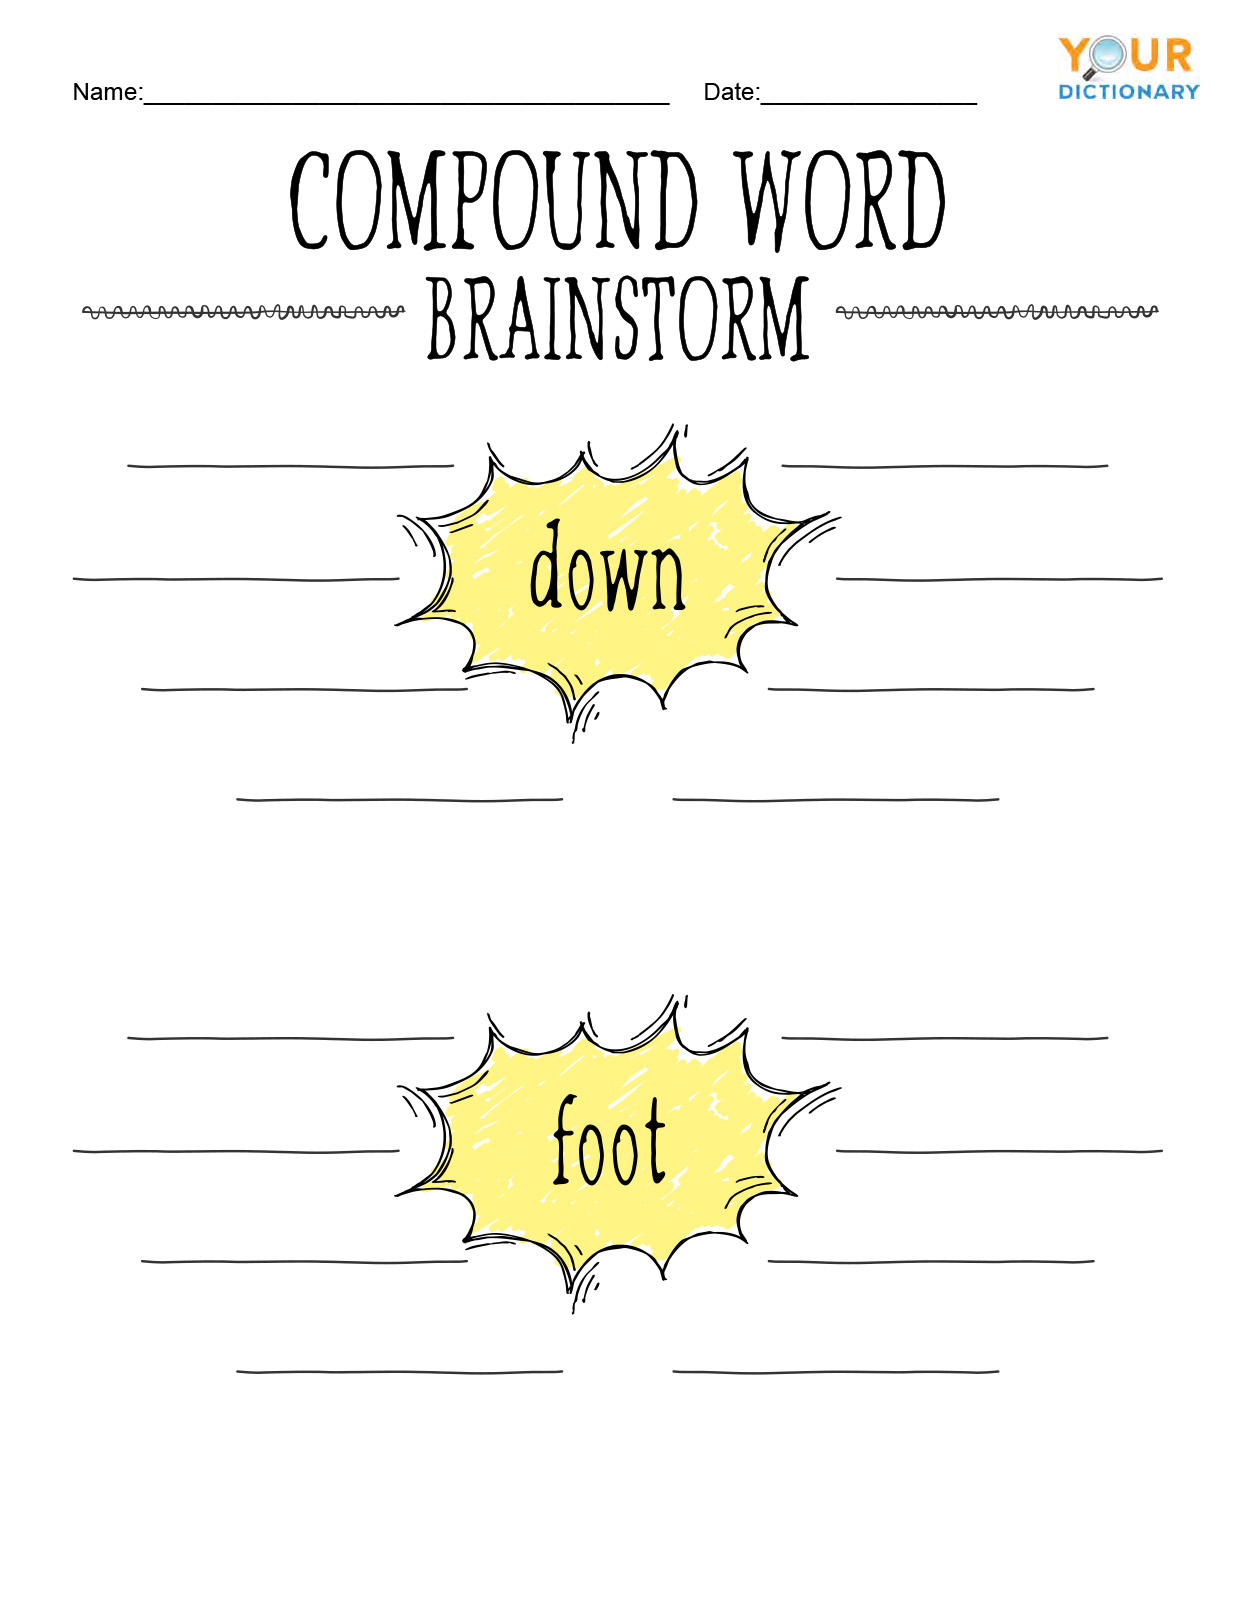 Compound Word Brainstorm Worksheet